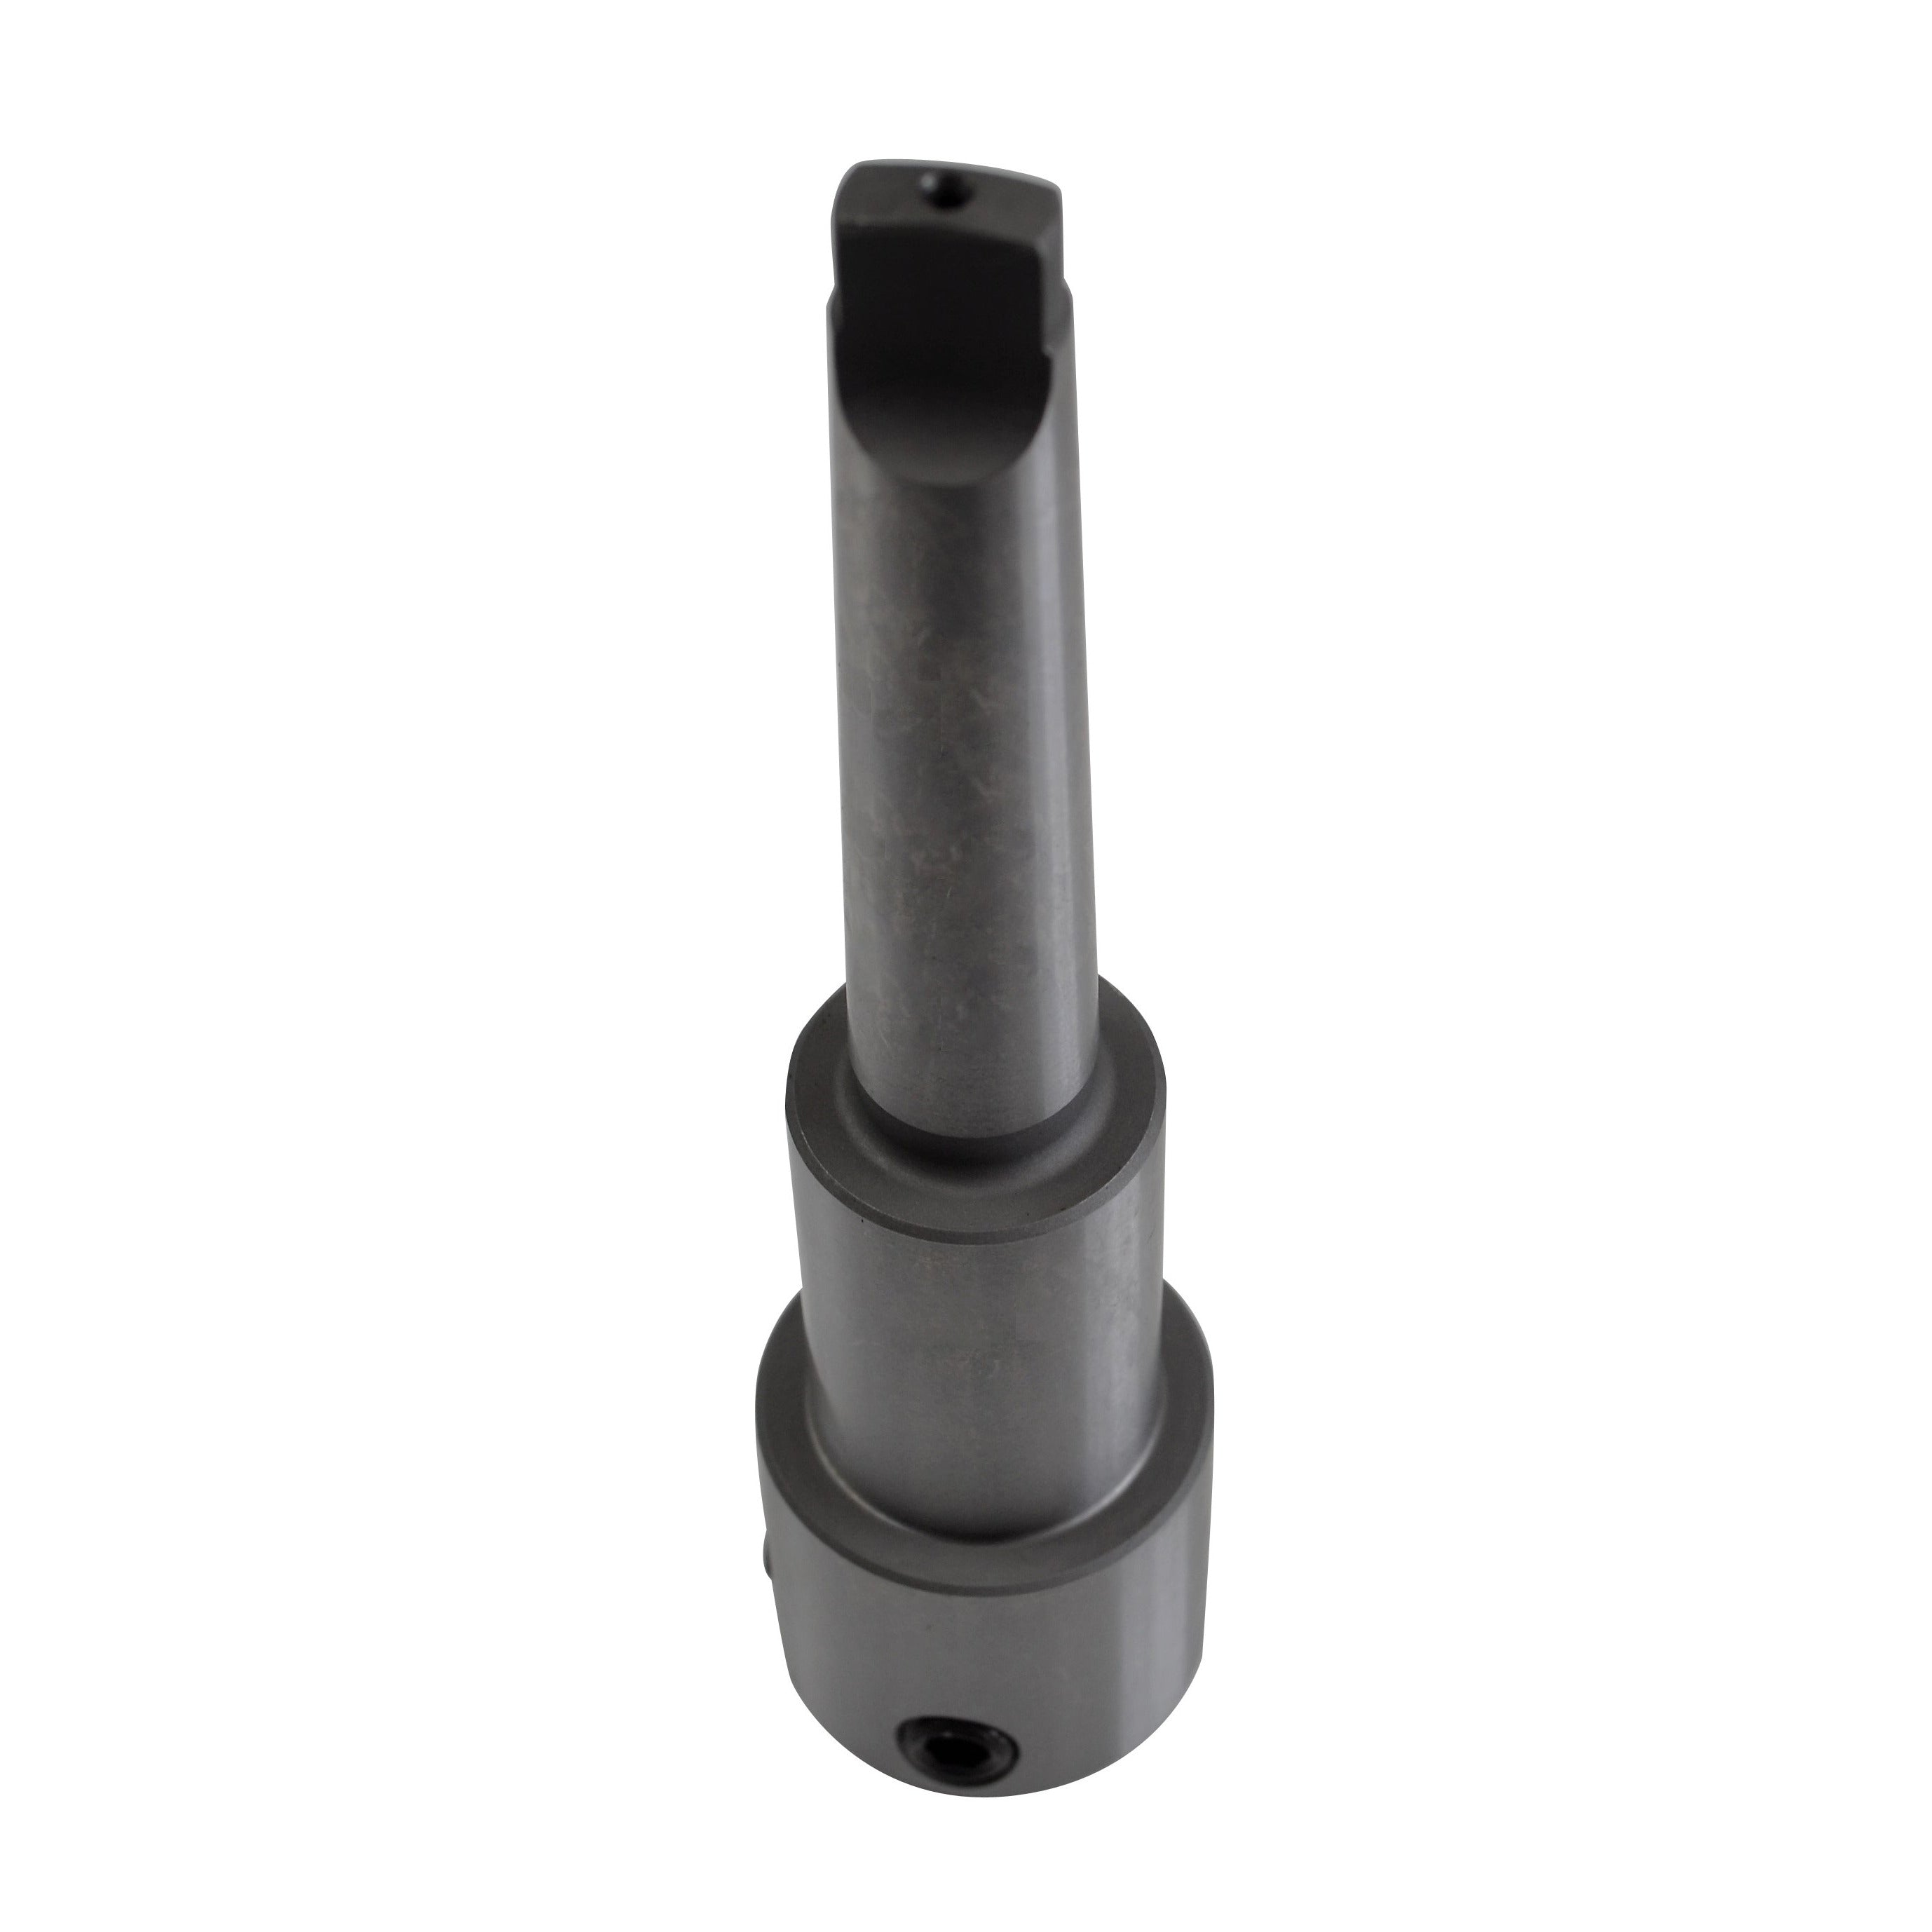 weldon holder 3/4" 19mm MT2 rota broach annular cutter adaptor morse tapper 2 hardware drill parts drill bits industrial